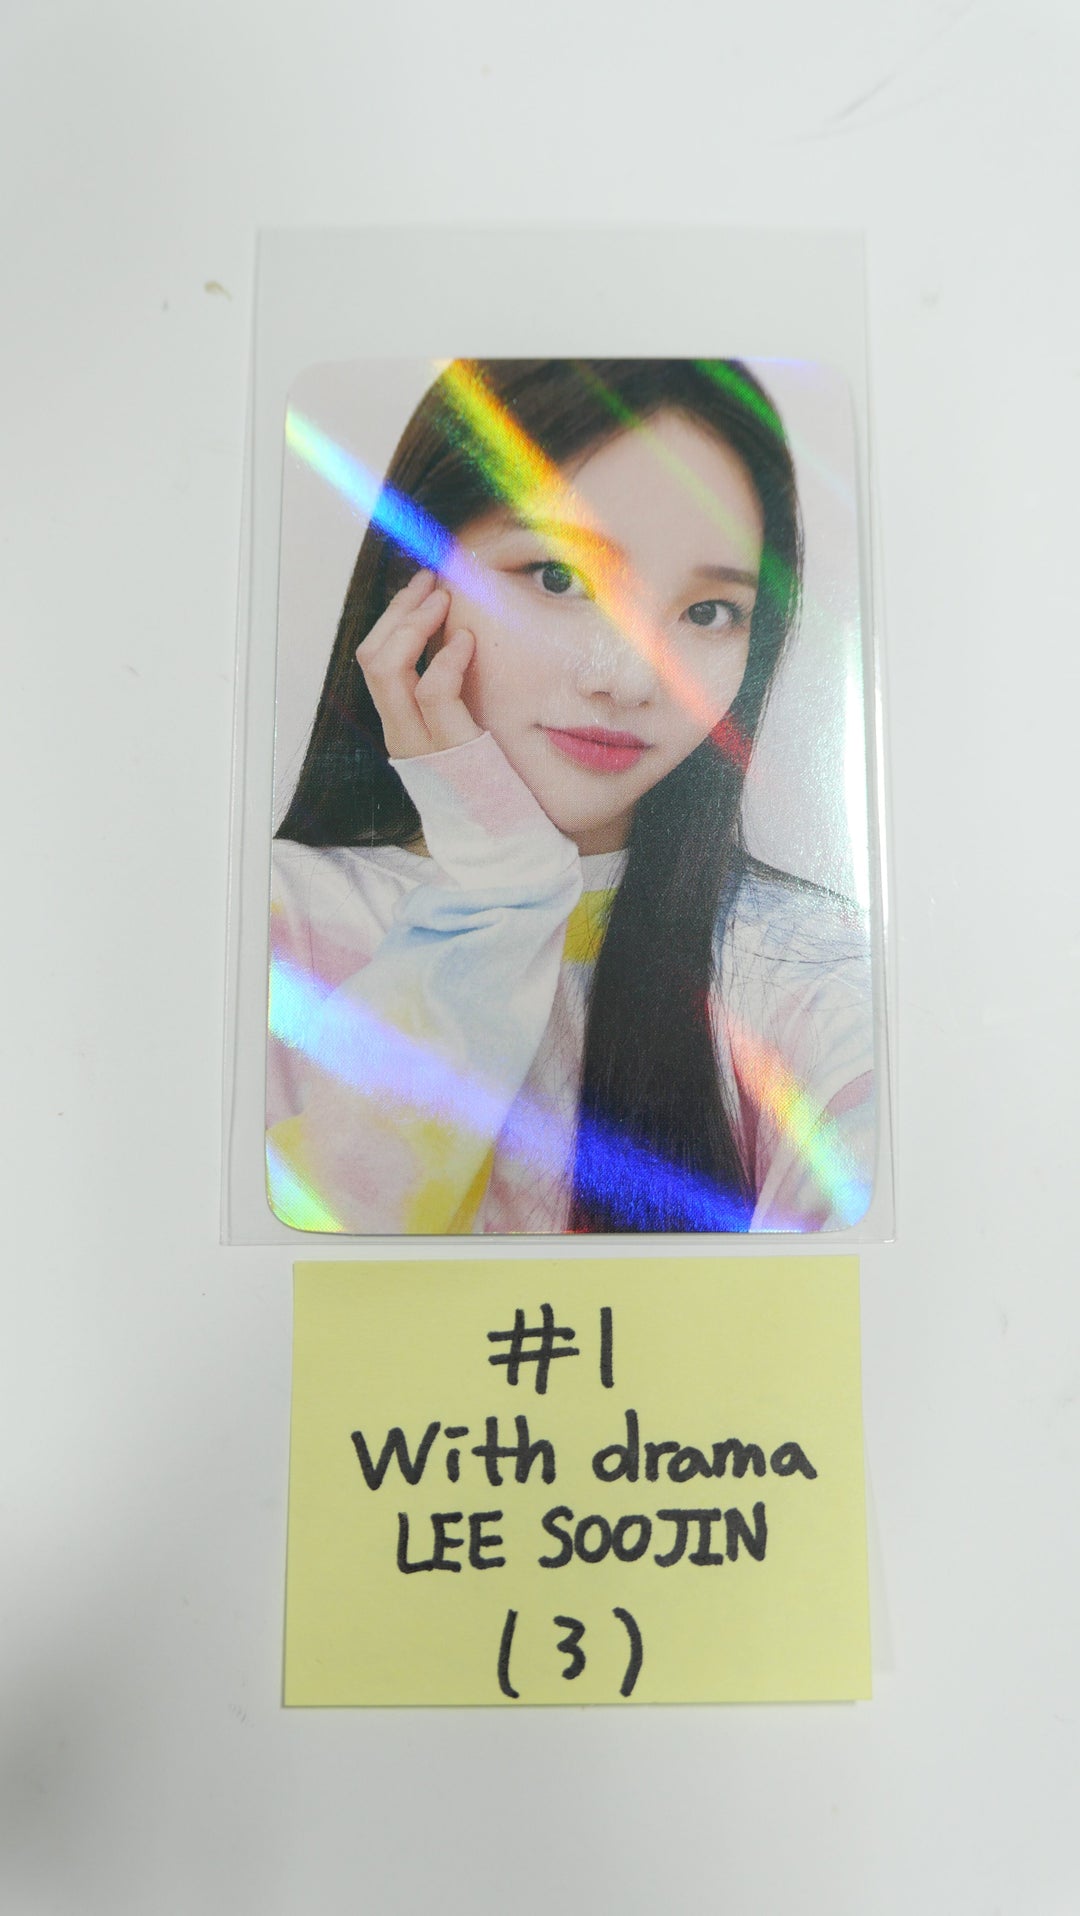 Weeekly "We Play" 3rd mini - Withdrama Hologram Photocard